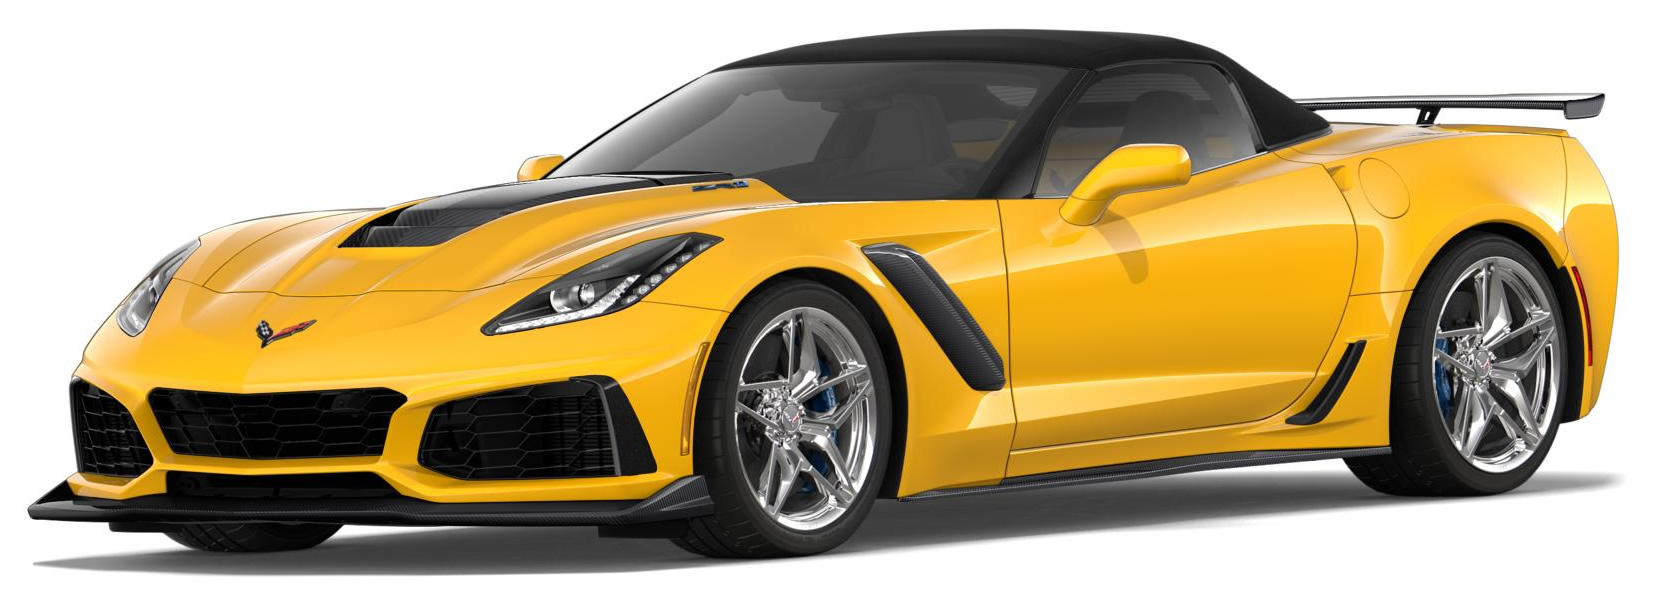 2019 Corvette ZR1 Convertible in Corvette Racing Yellow with Chrome wheels